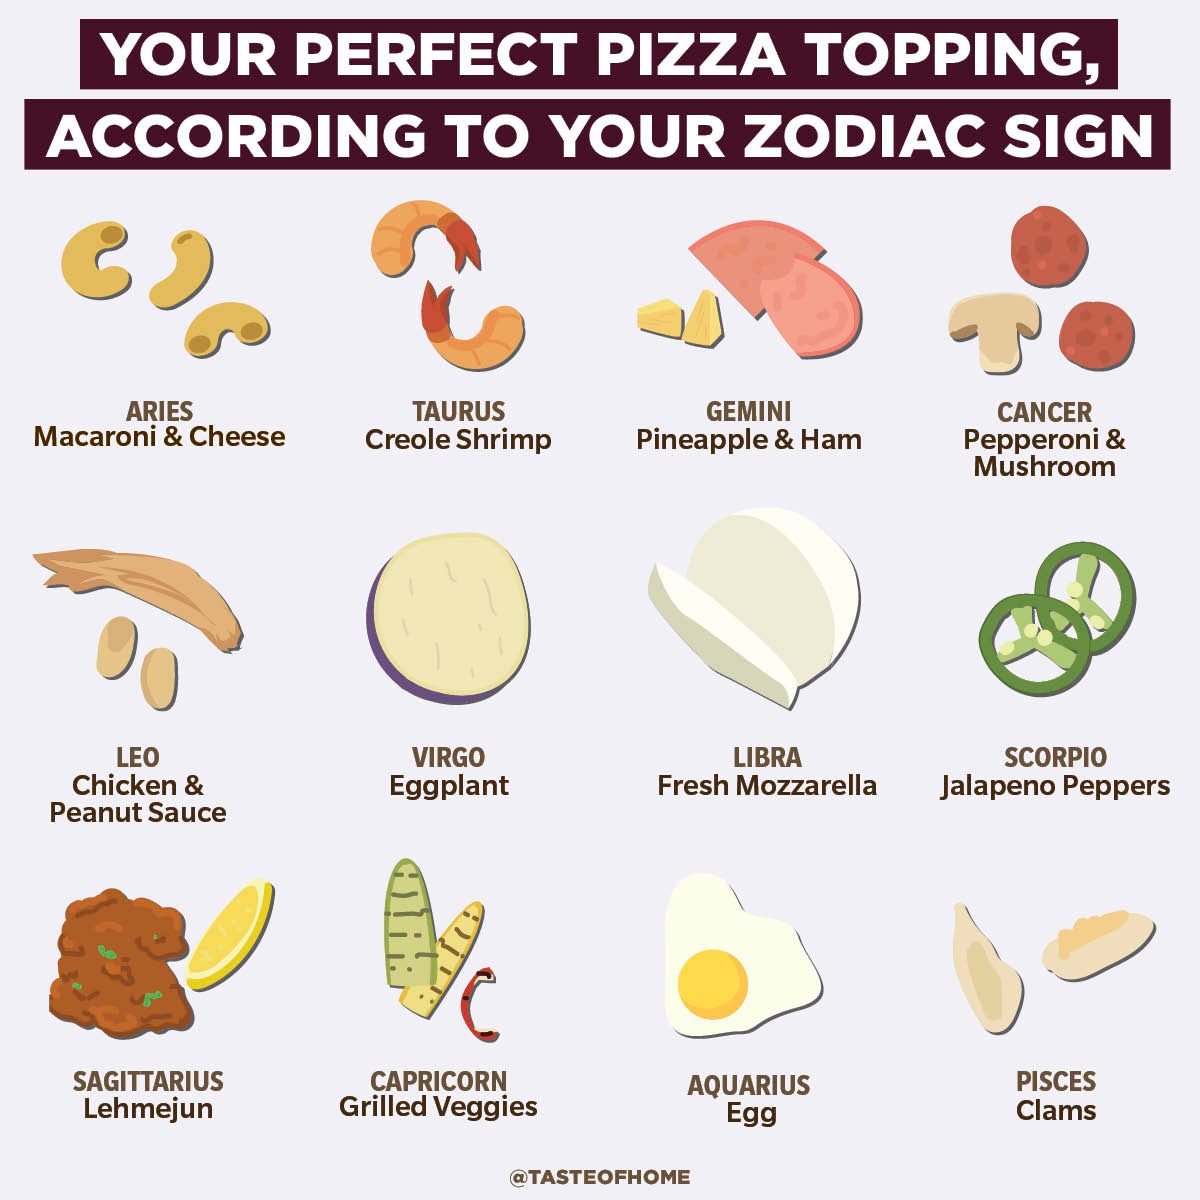 Toppingul de pizza care ti se potriveste in functie de zodie Your-Perfect-Pizza-Topping-According-to-Your-Zodiac-Sign